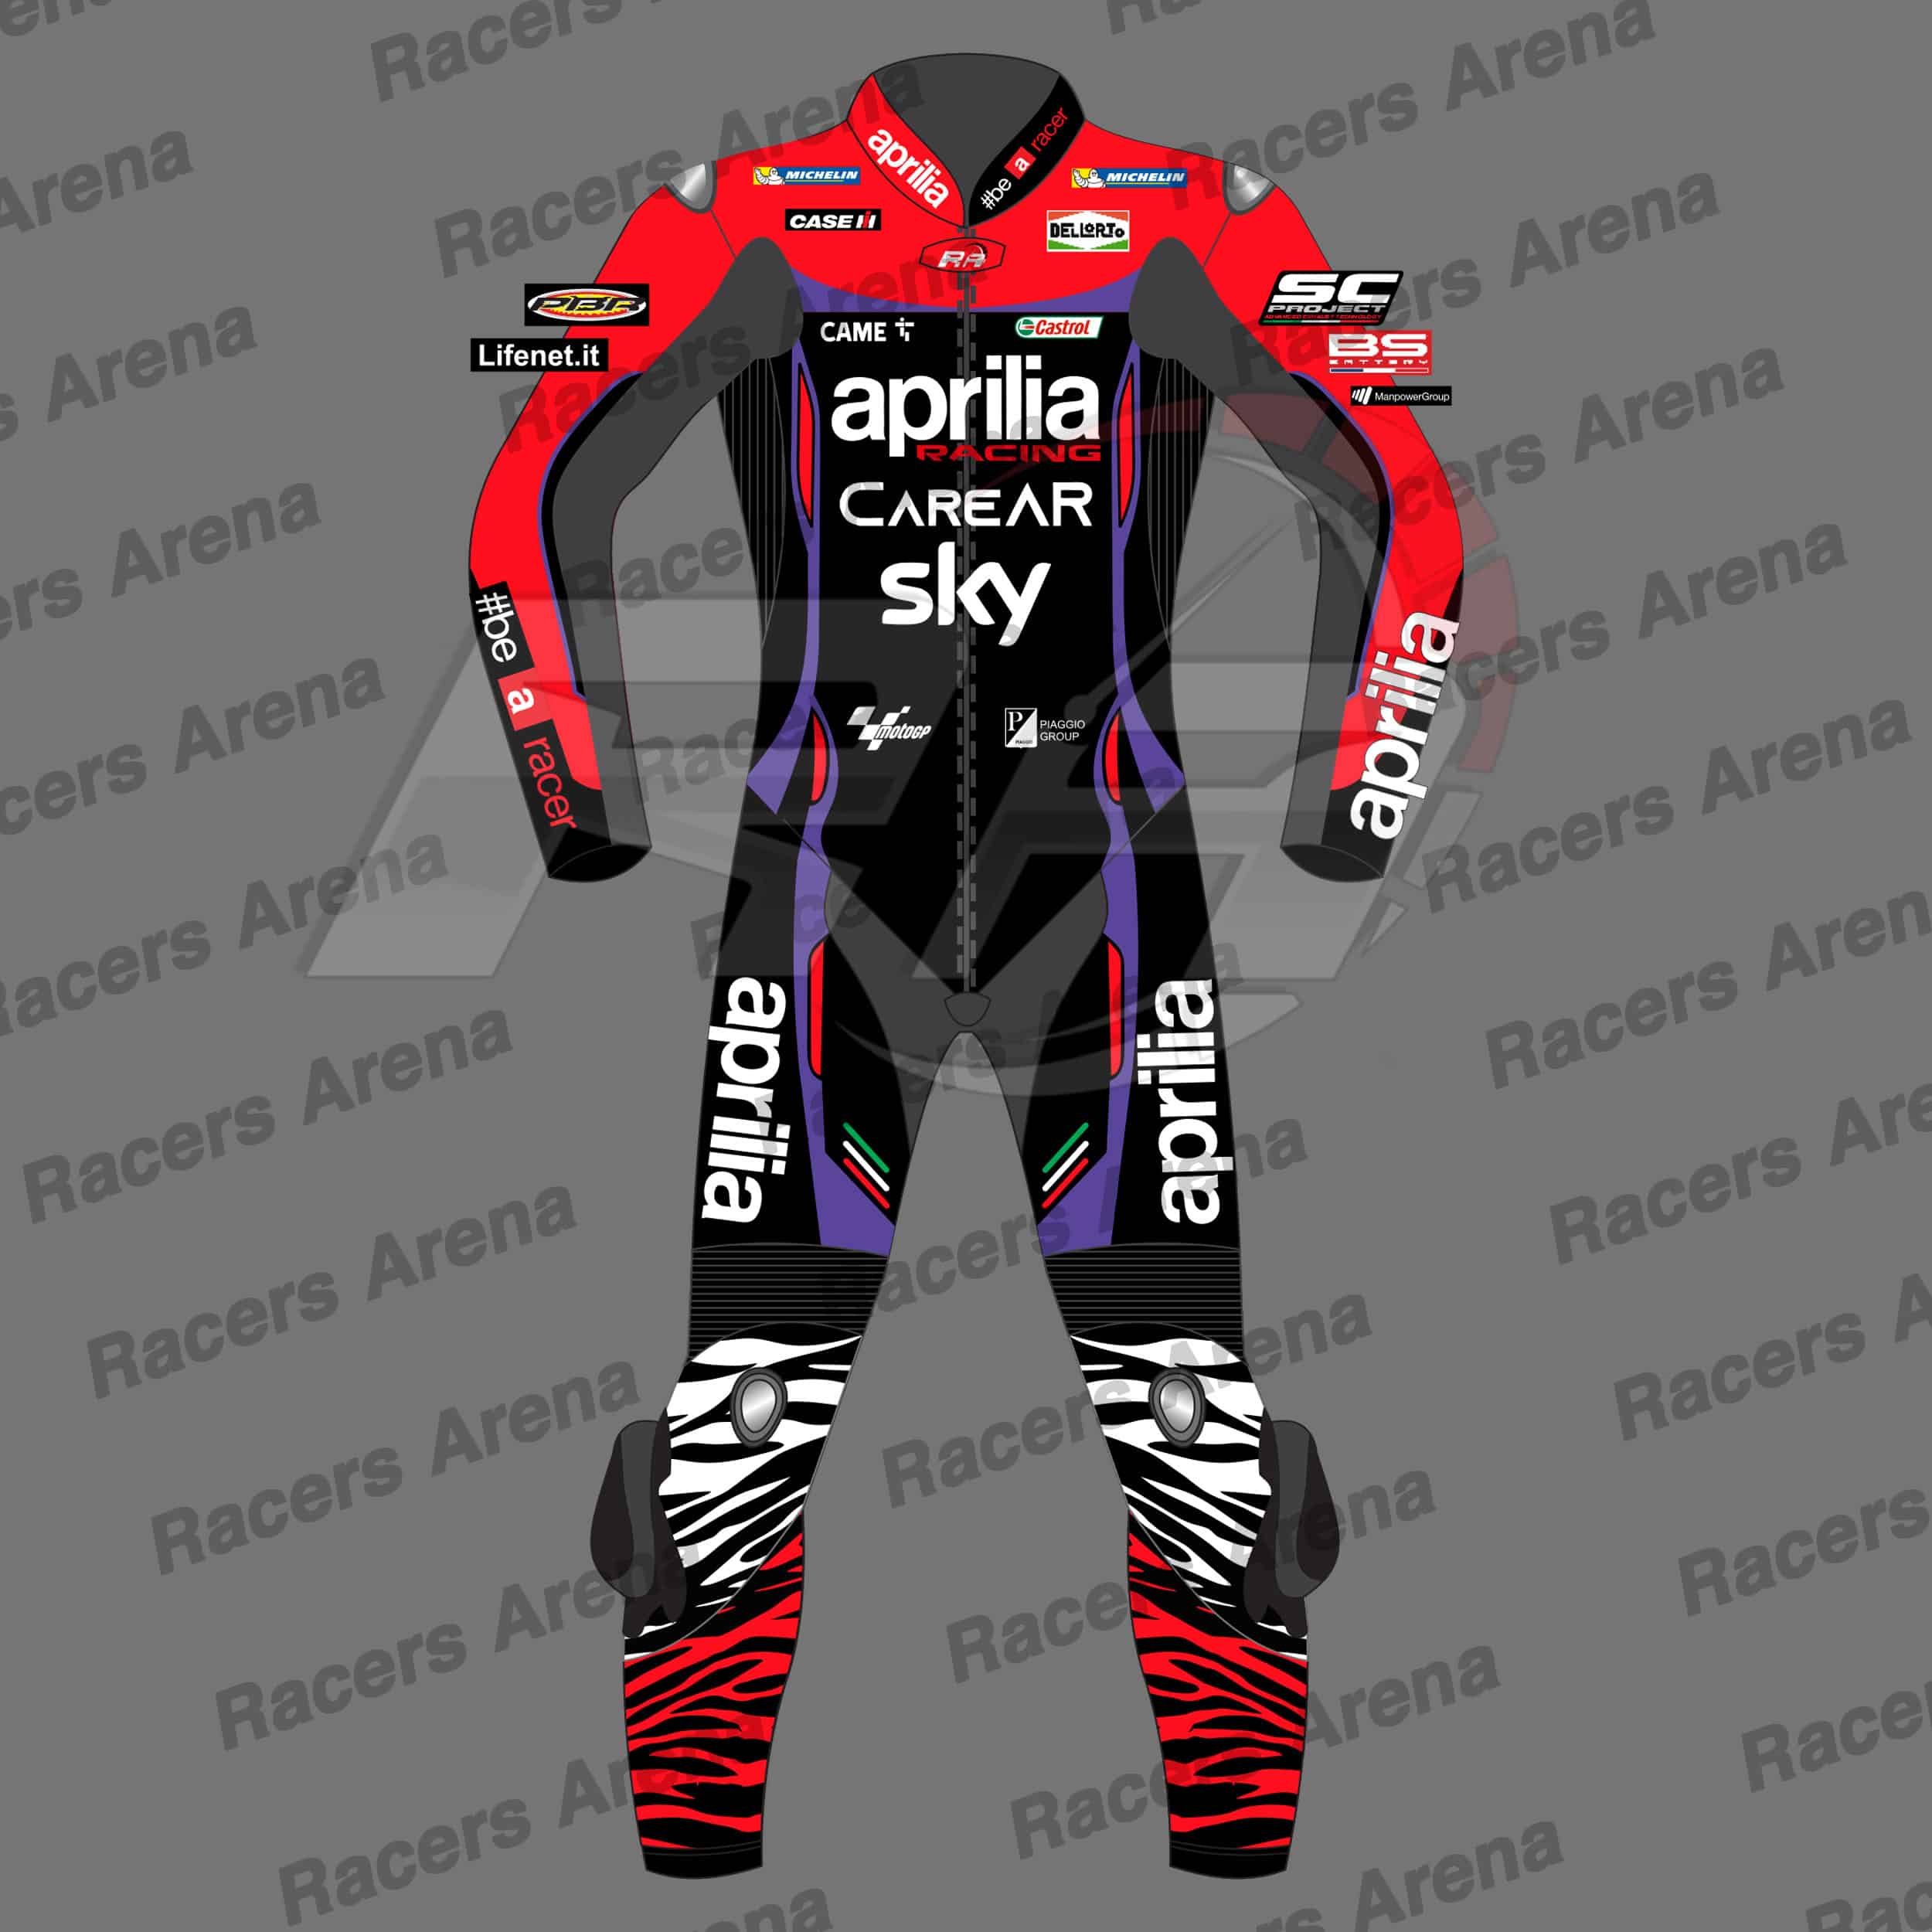 Aleix Espargaro MotoGP 2023 Aprilia Racing Suit - Racers Arena UK